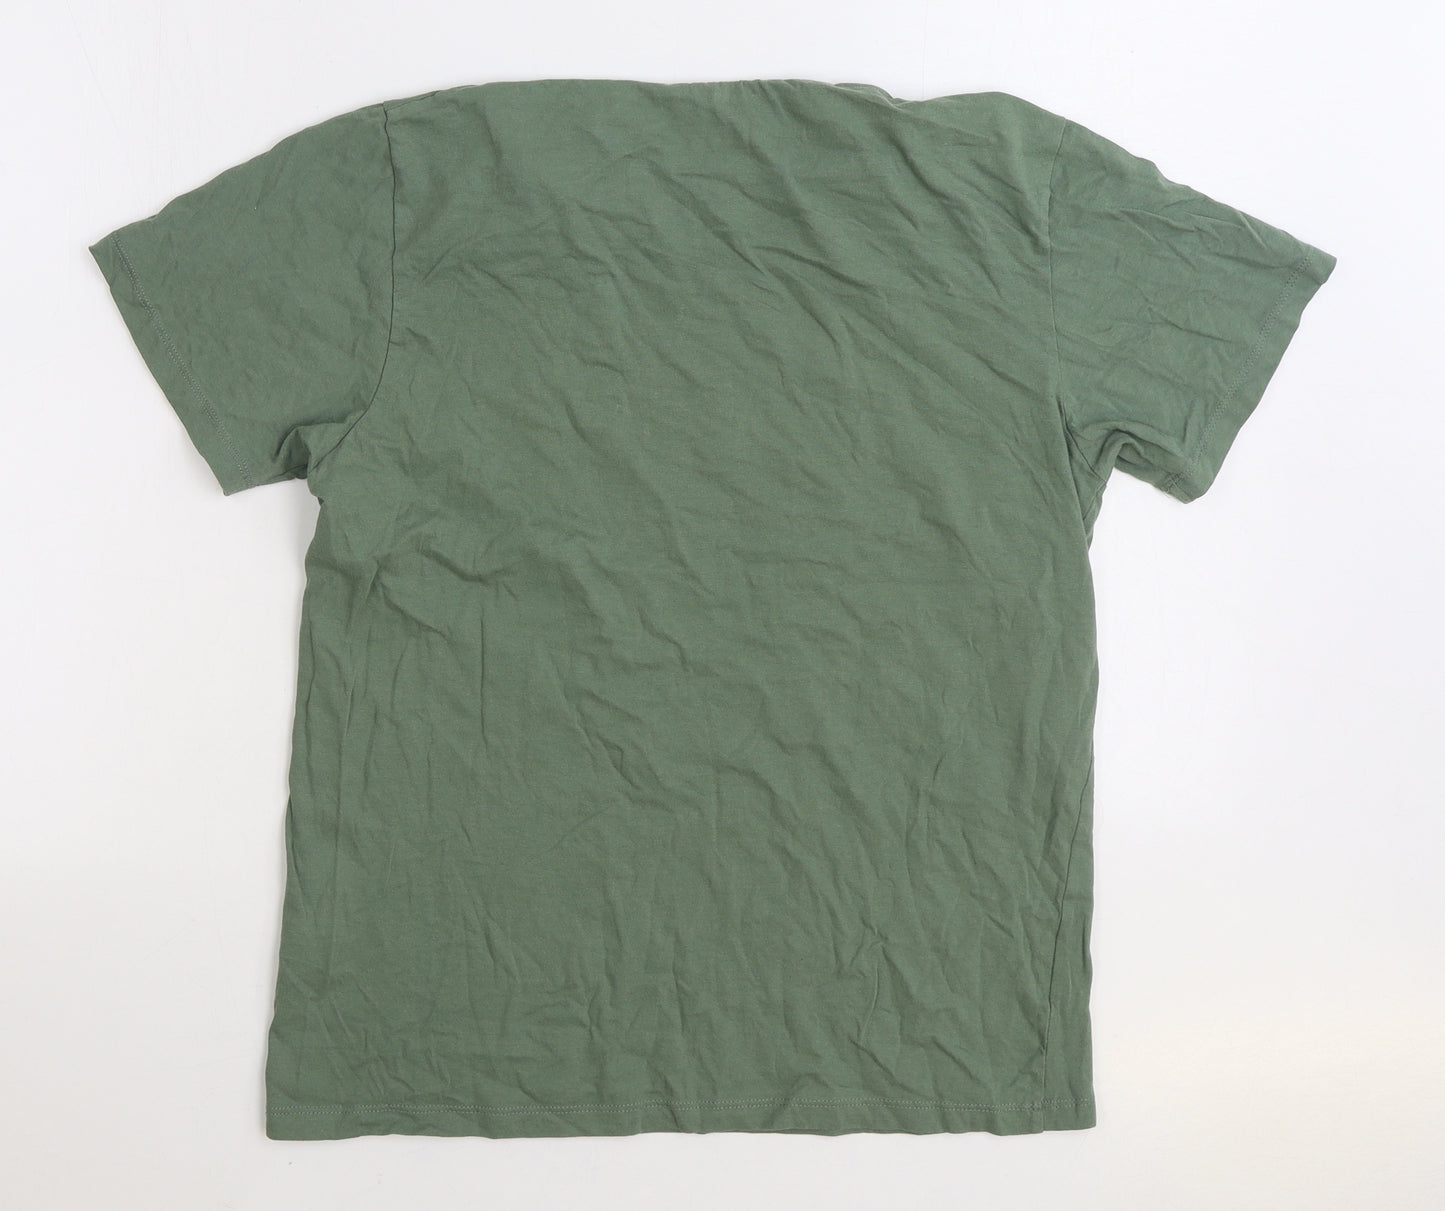 Primark Mens Green Cotton T-Shirt Size M Round Neck - Woke